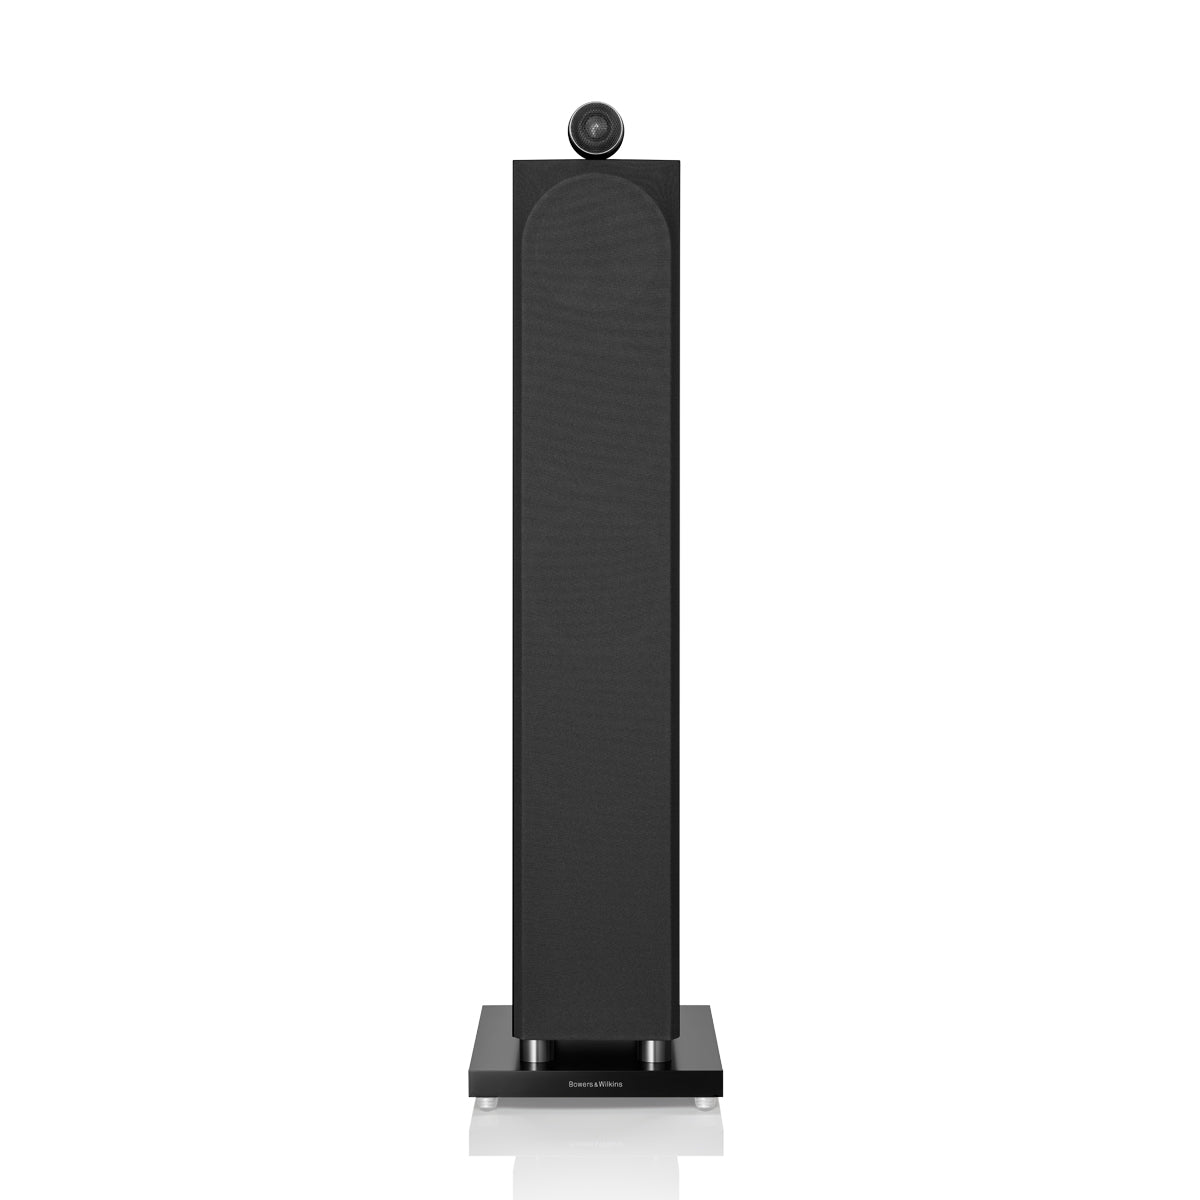 Bowers & Wilkins 702 S3 3-Way Floor Standing Speakers - Gloss Black - The Audio Experts